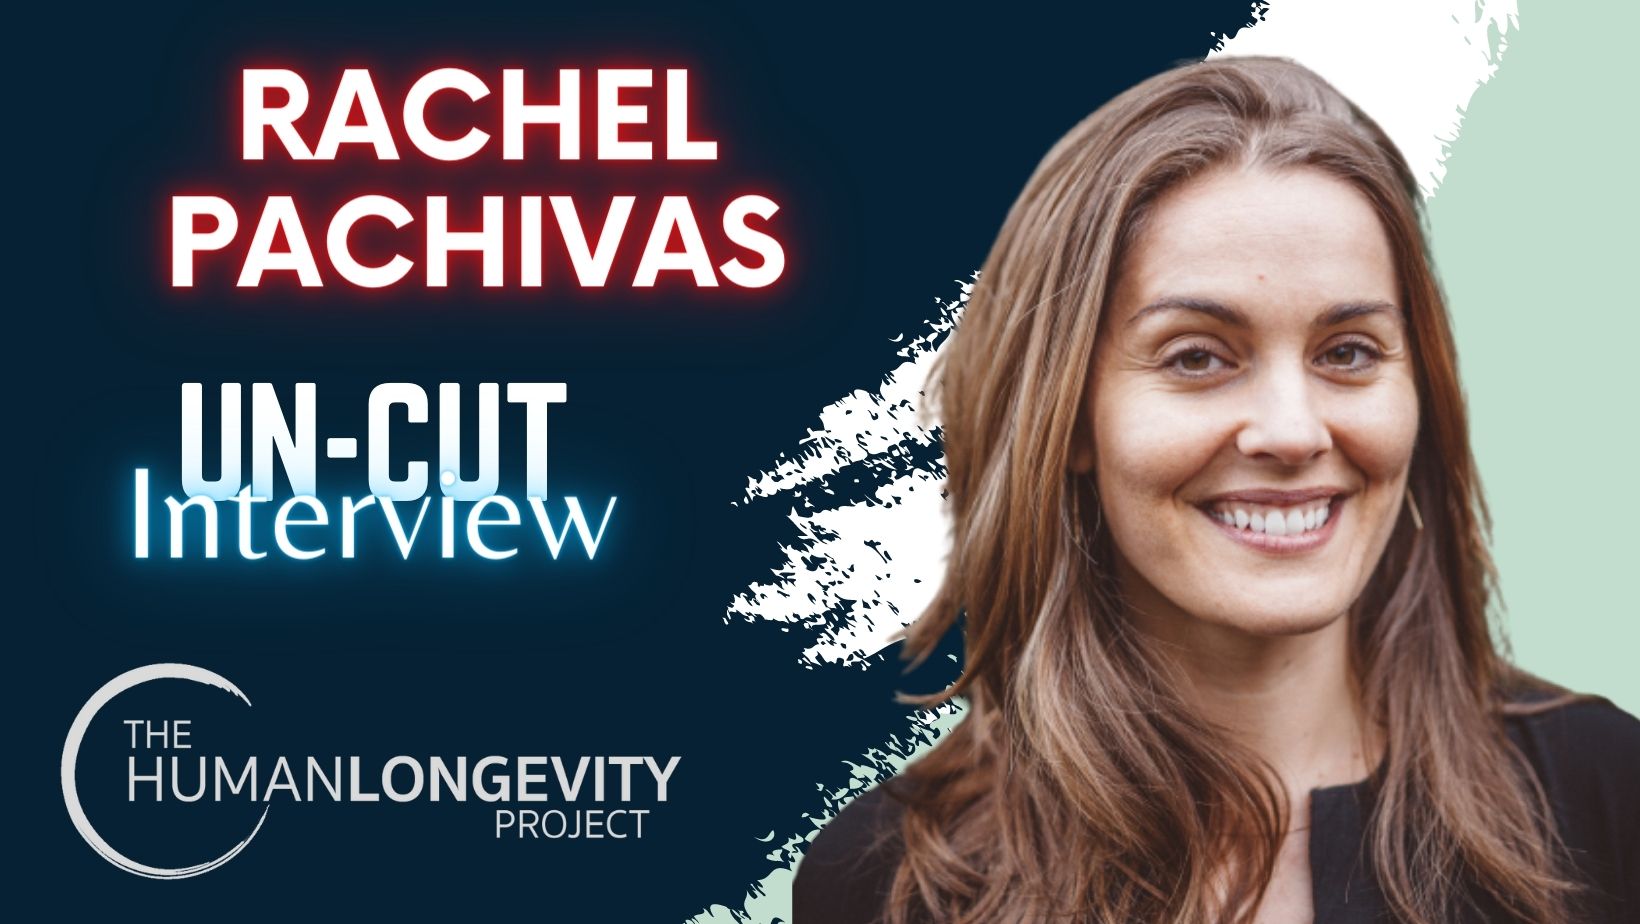 Human Longevity Project Uncut Interview With Rachel Pachivas